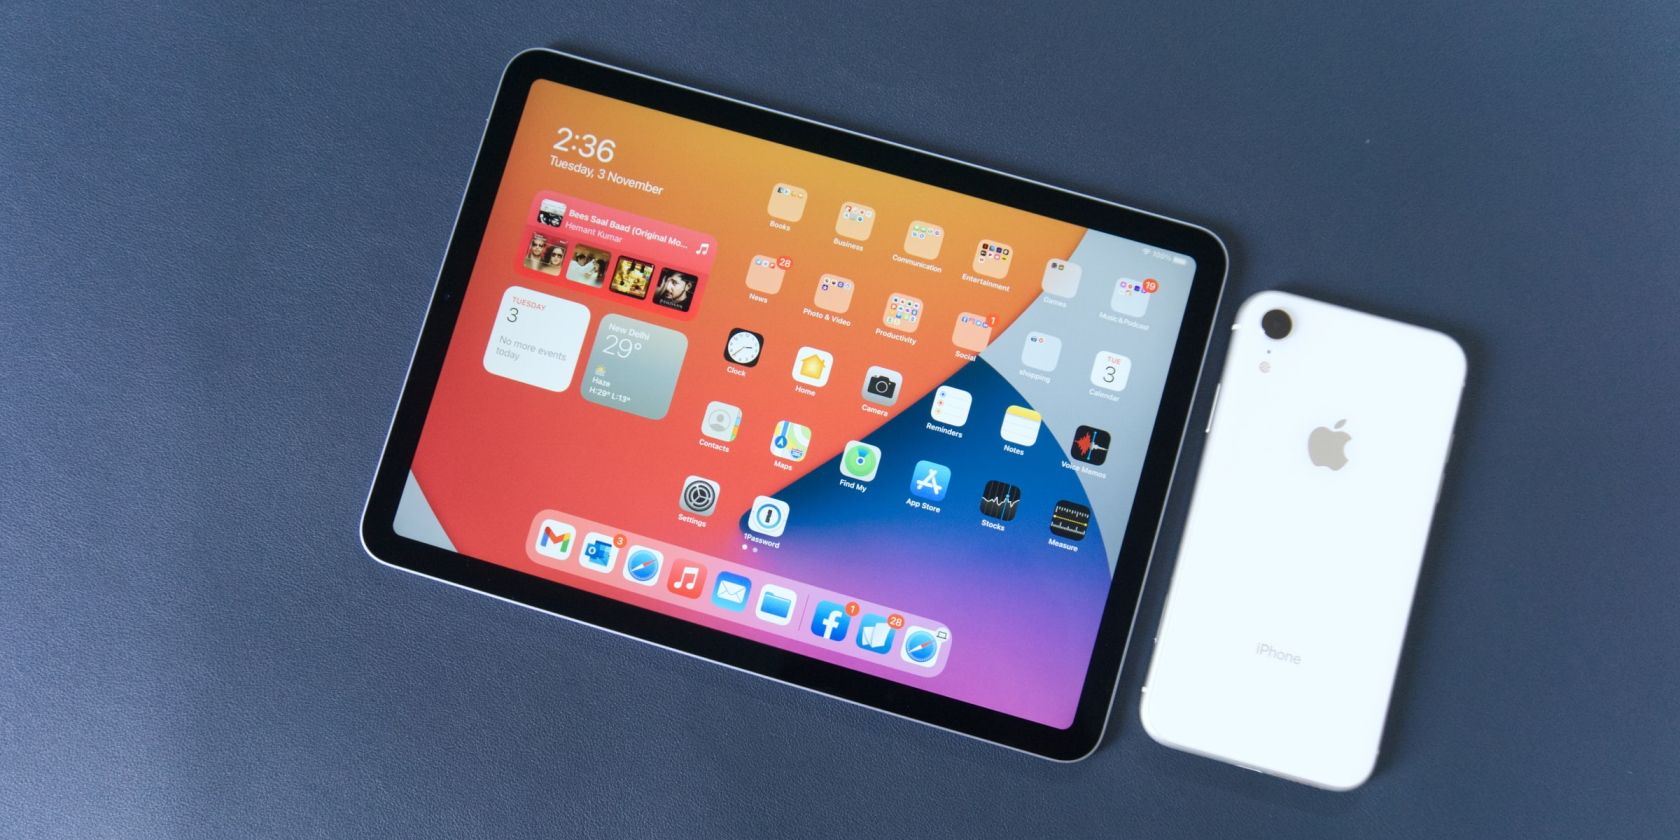 iPad Pro 11-inch next to iPhone